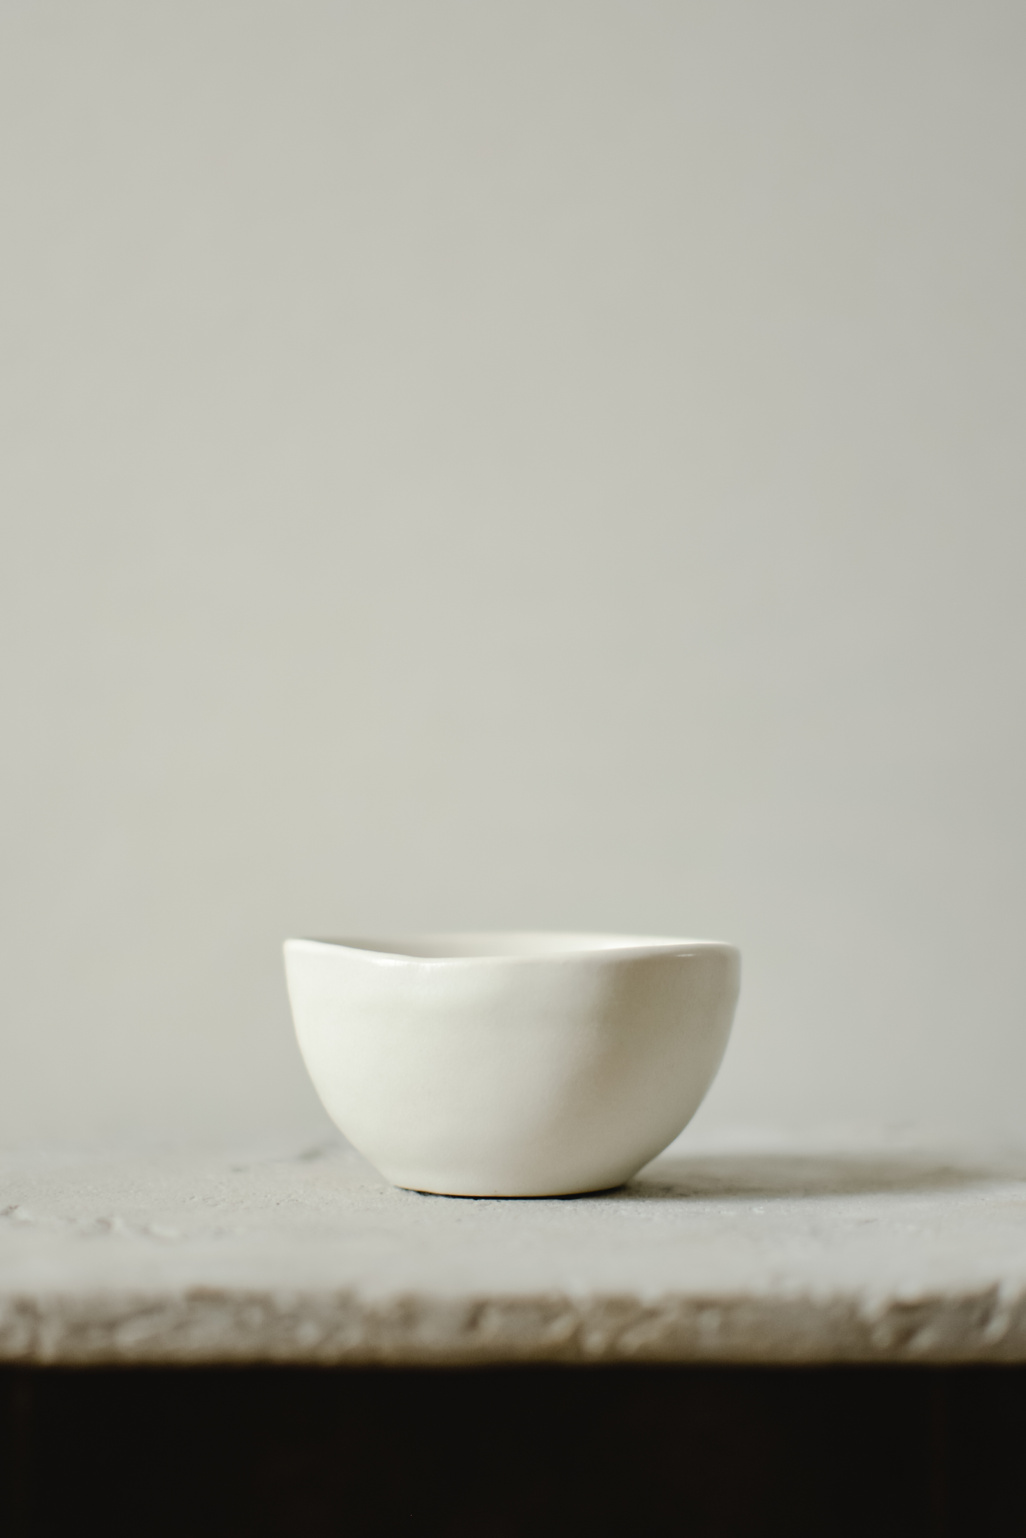 White Ceramic Bowl in Close Up Shot